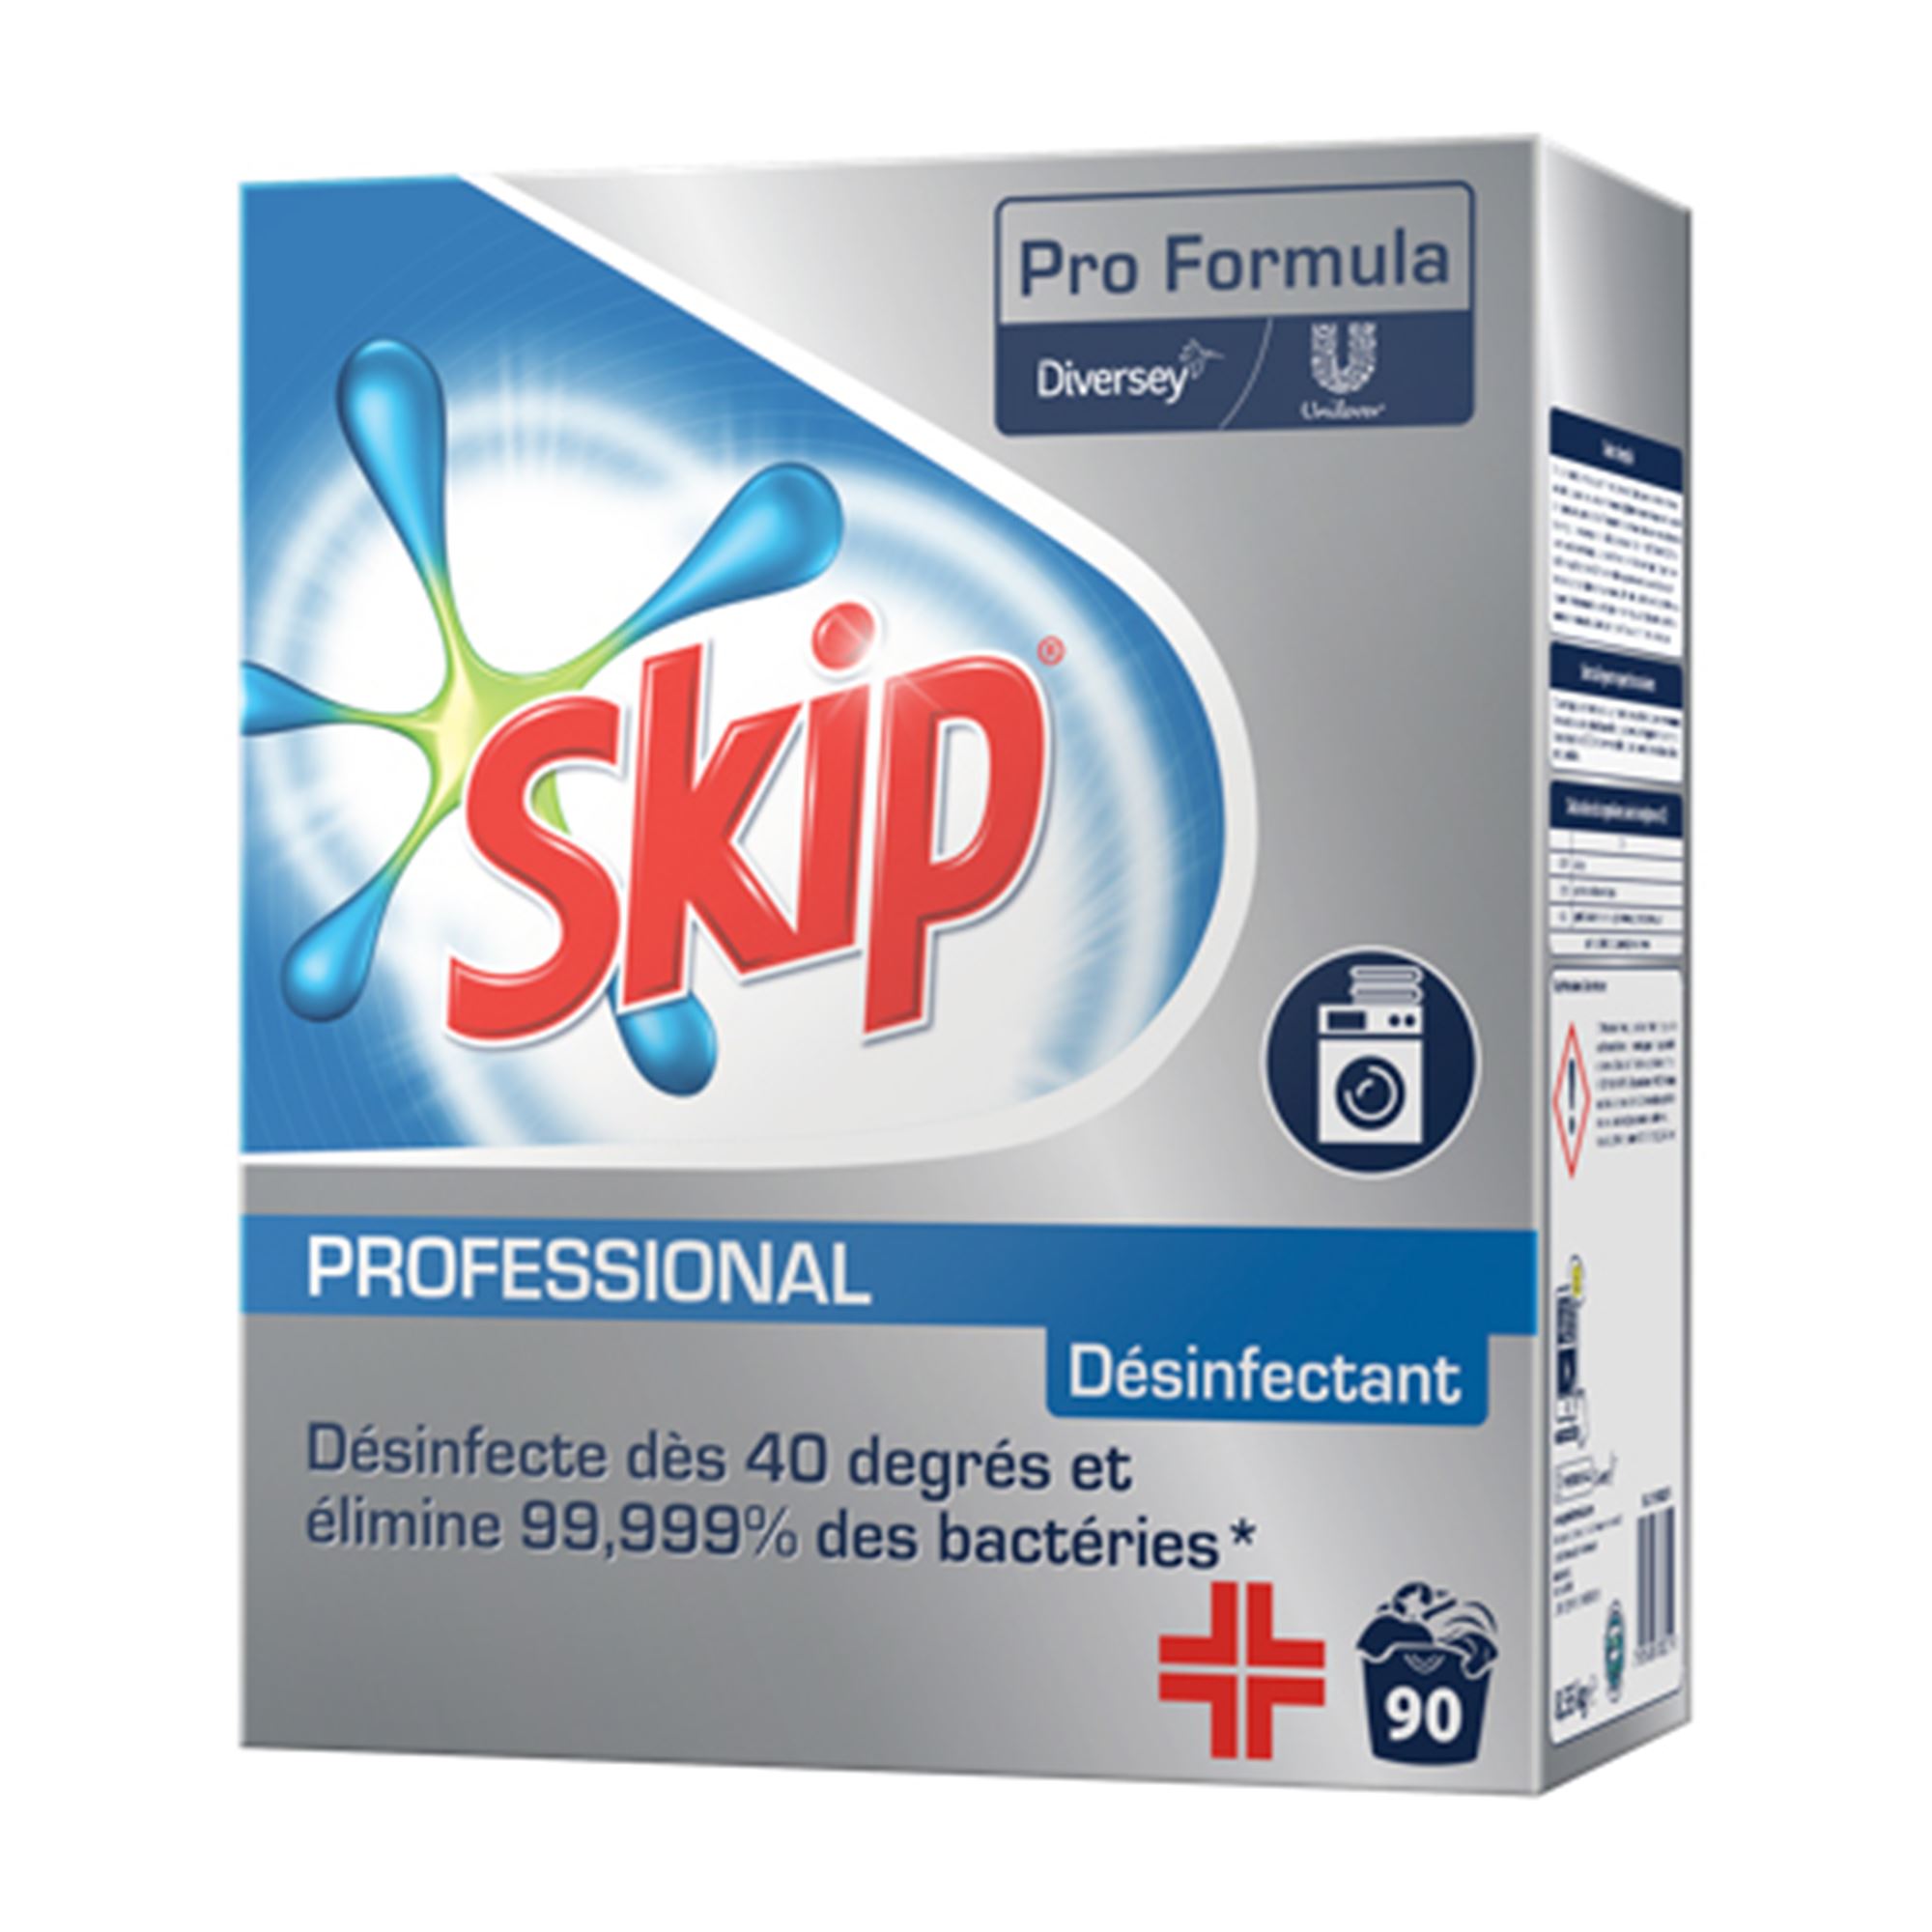 Skip professional disinfectant - Voussert